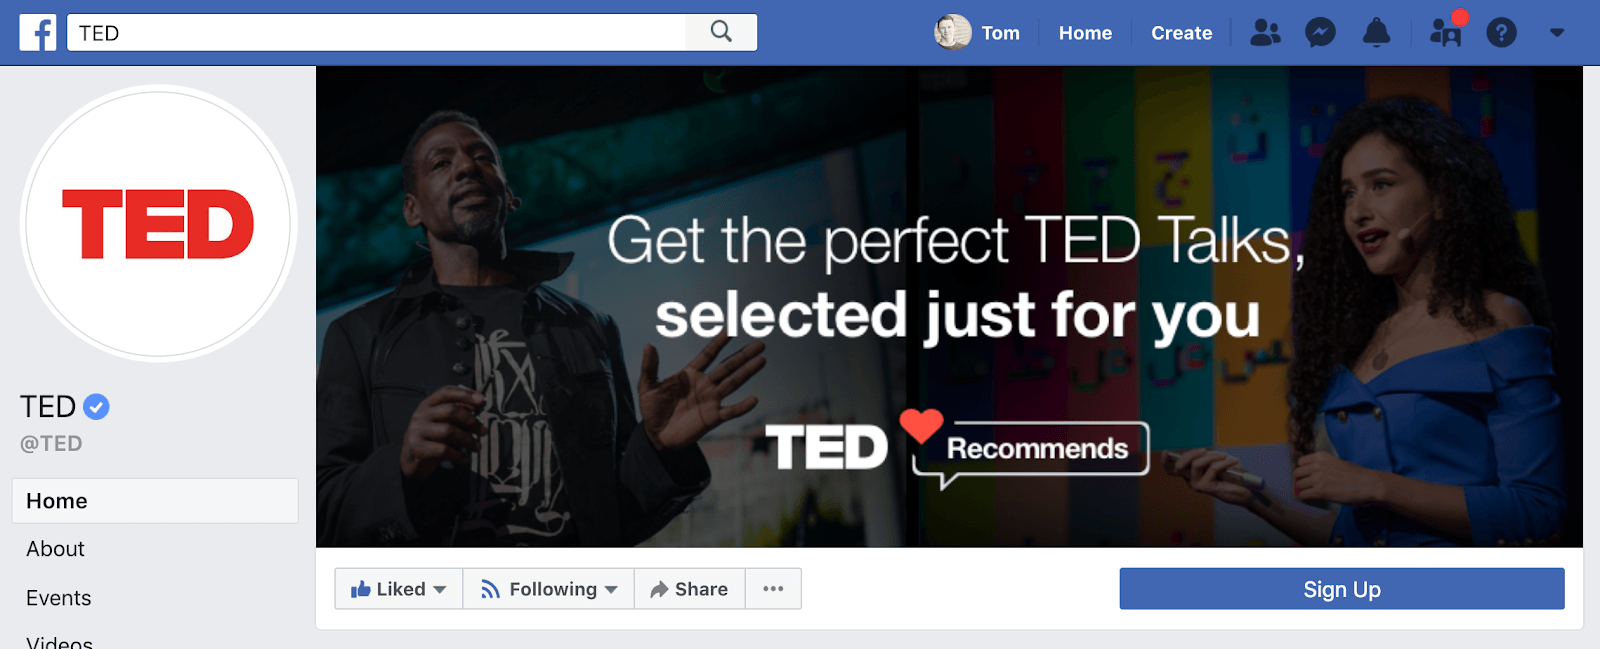 Ted演讲Facebook主页